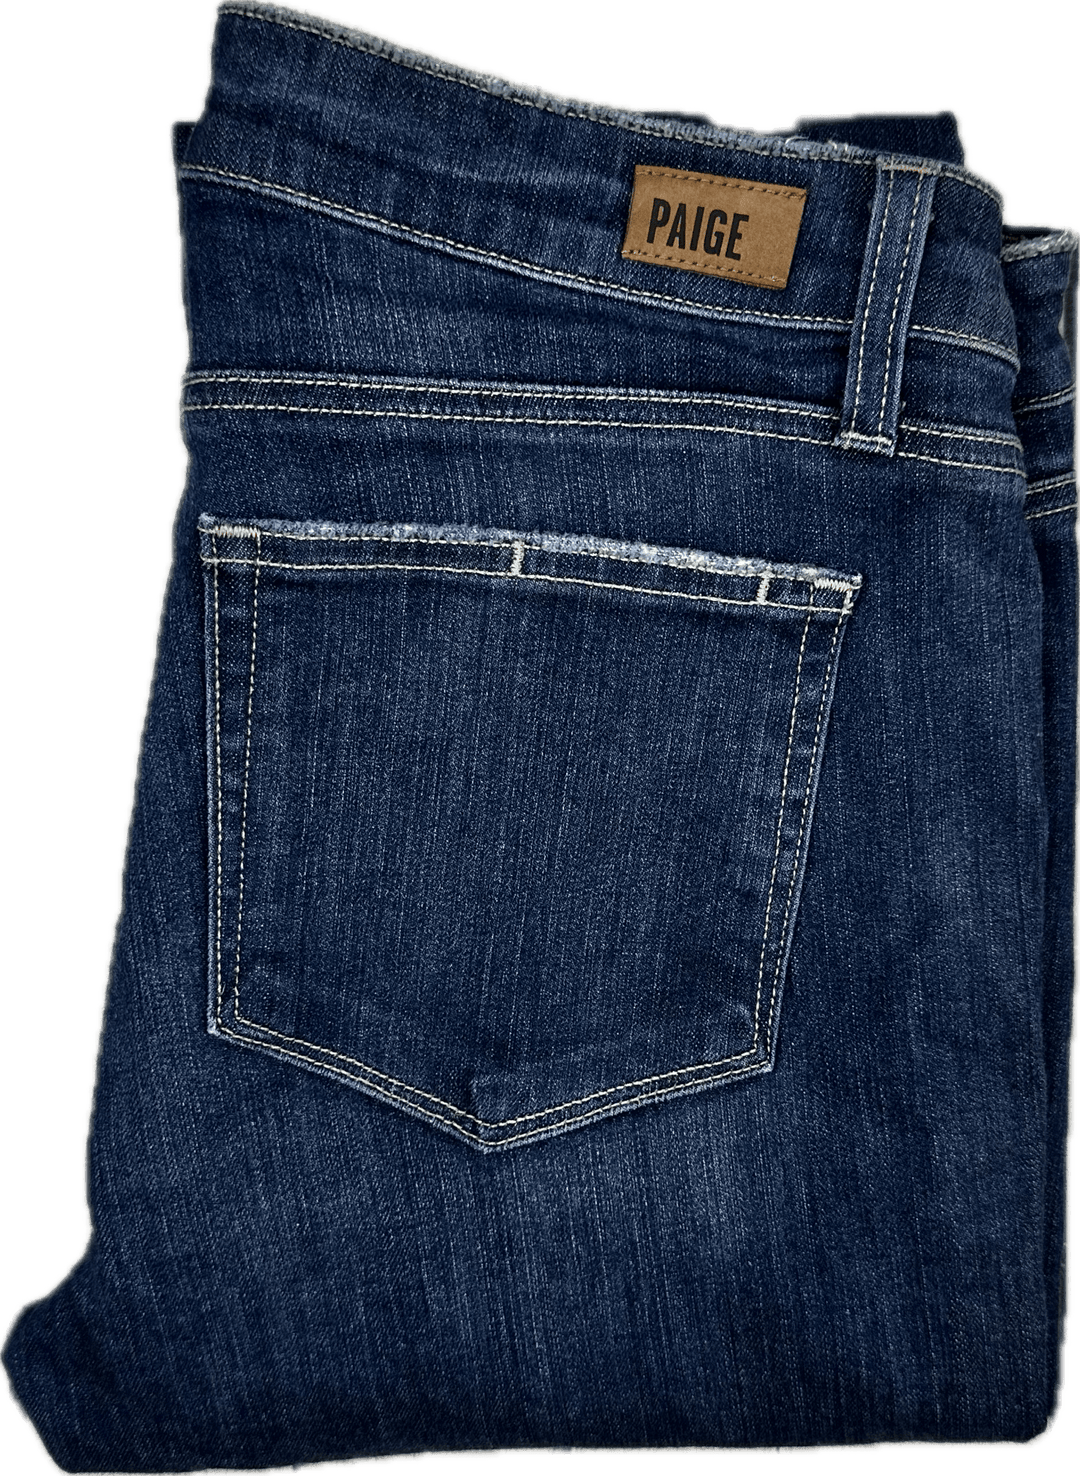 Paige Denim 'Riley Crop Flare' Stretch Jeans- Size 31 - Jean Pool